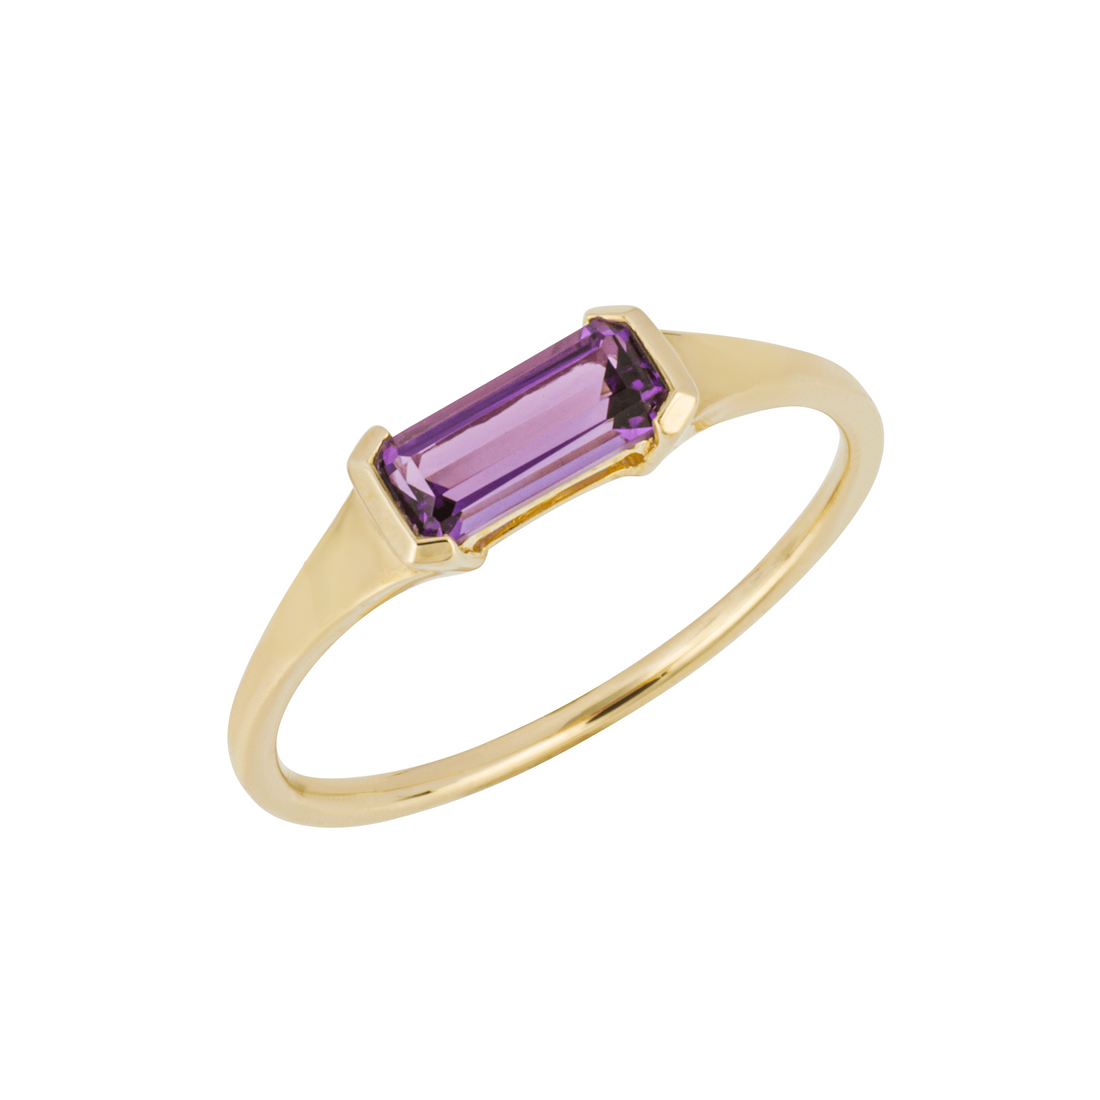 Elongated Purple Amethyst Ring in 9ct Yellow Gold - Robert Anthony Jewellers, Edinburgh